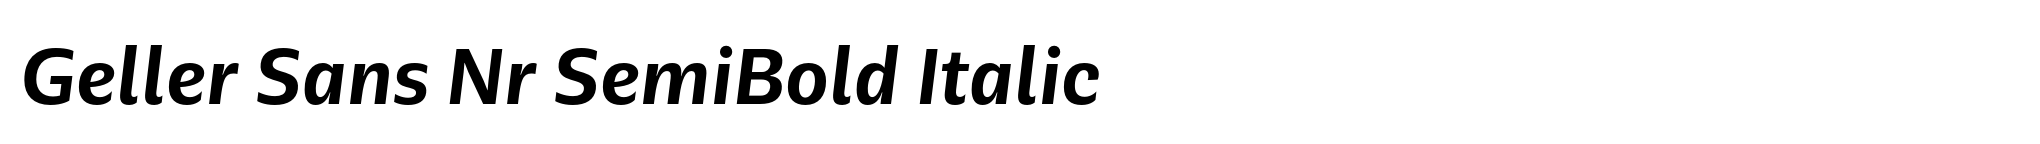 Geller Sans Nr SemiBold Italic image